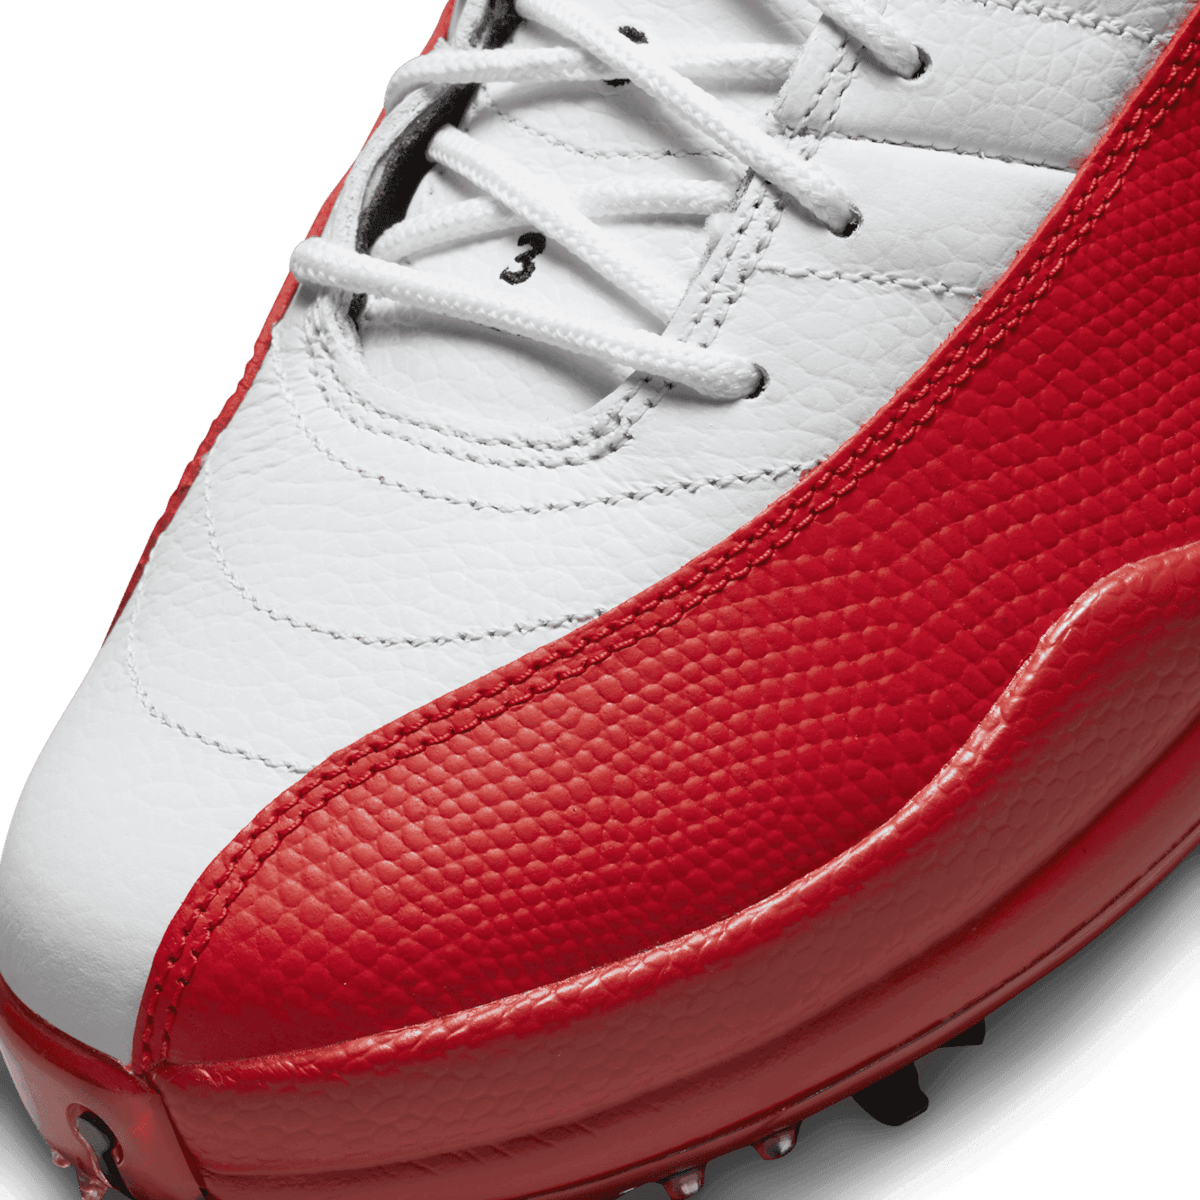 Air Jordan 12 Retro Low Golf Cherry Angle 5